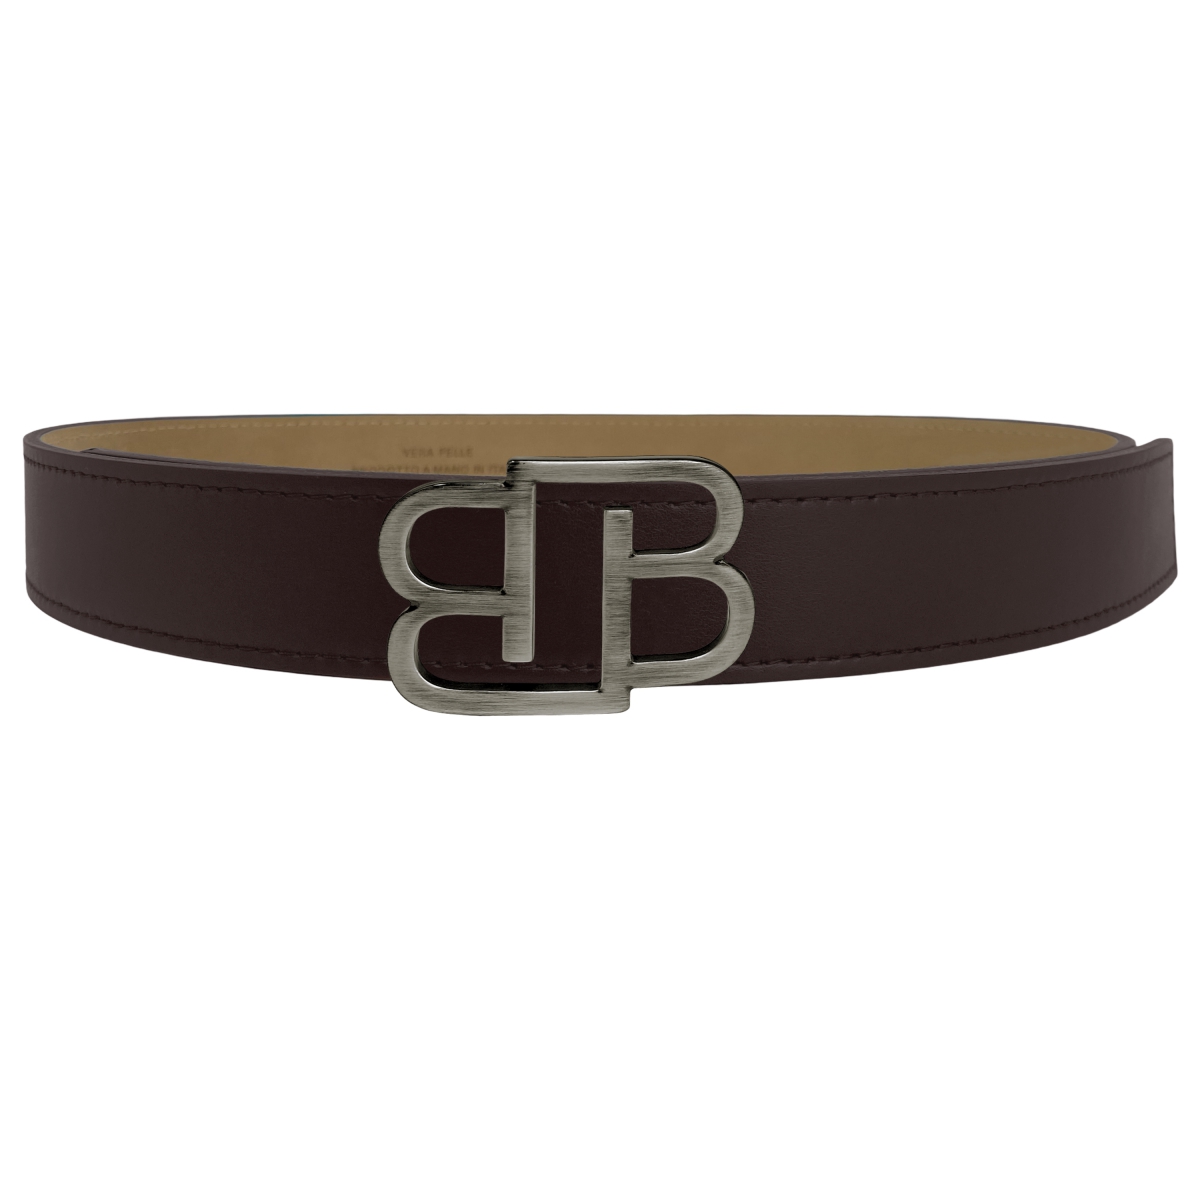 BRUCLE Dark brown belt with shiny nickel BB buckle